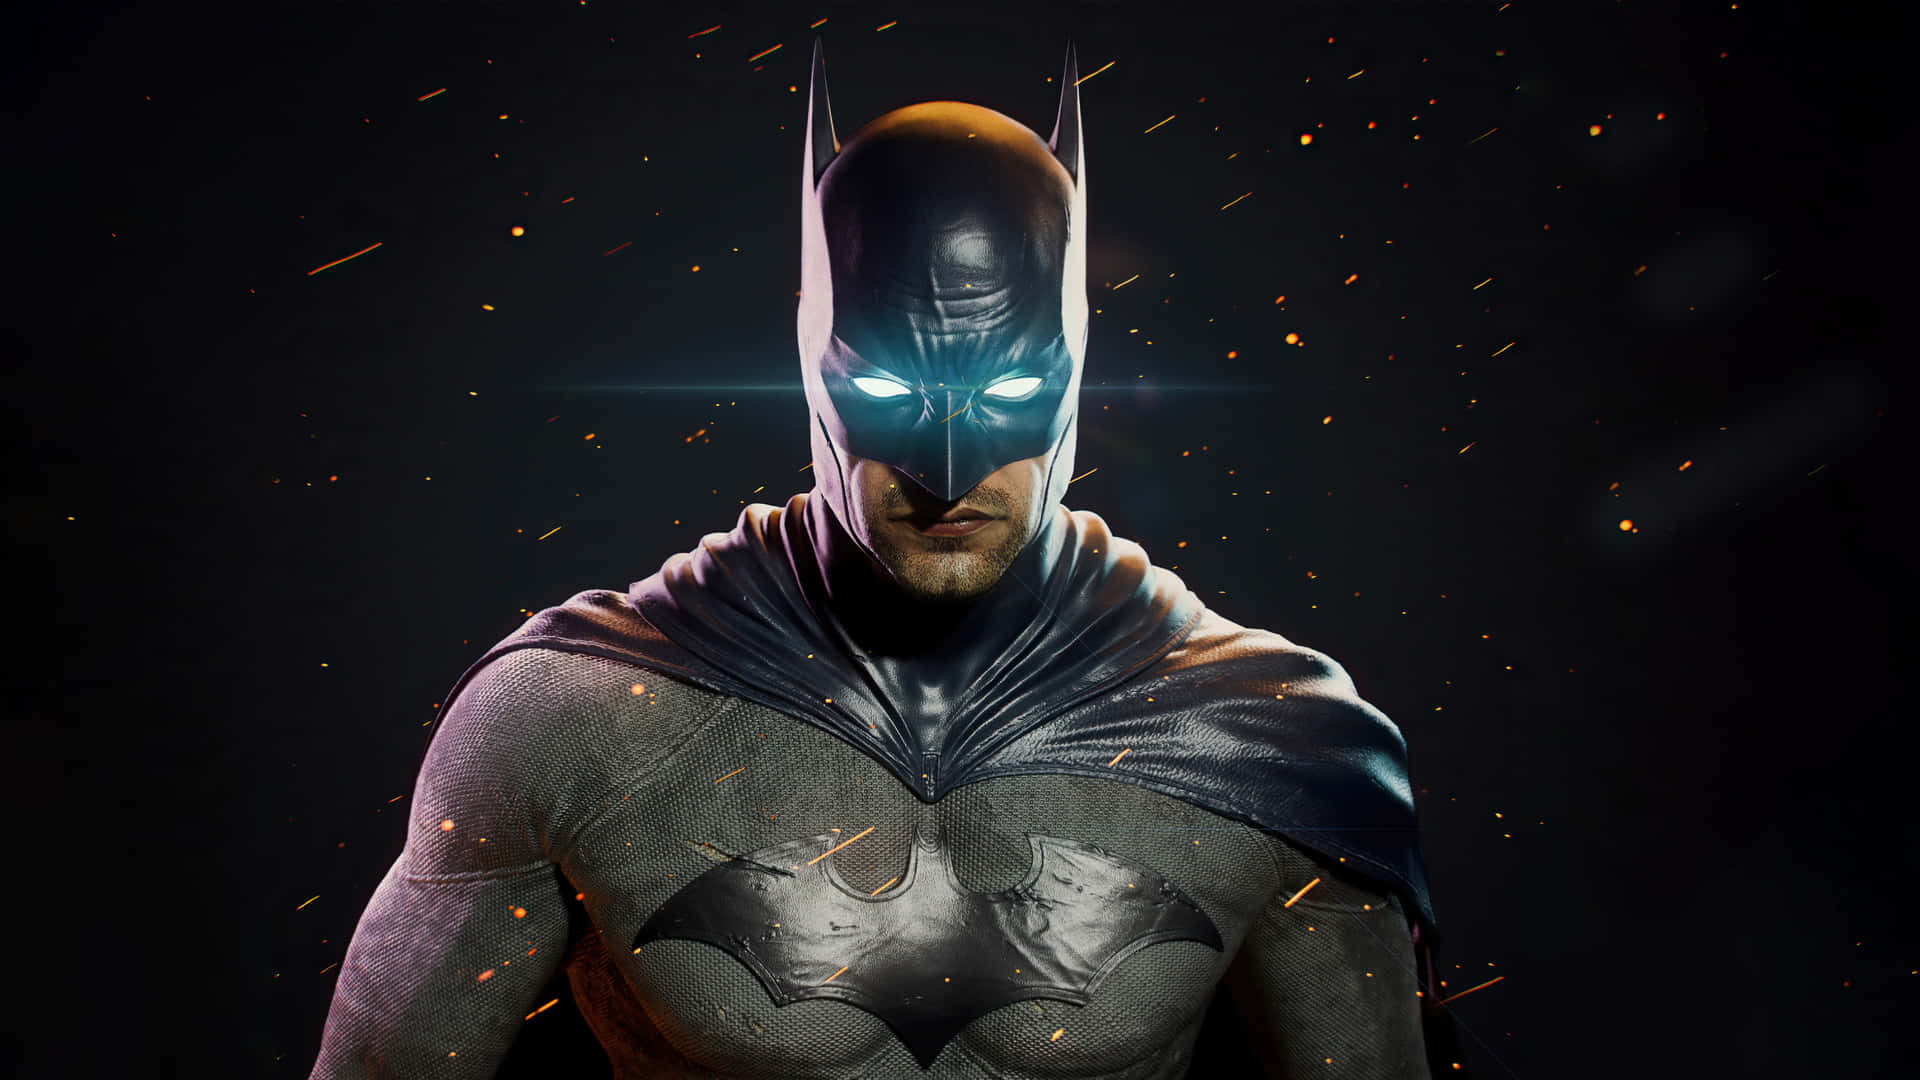 Join The Dark Knight In Metropolis Wallpaper